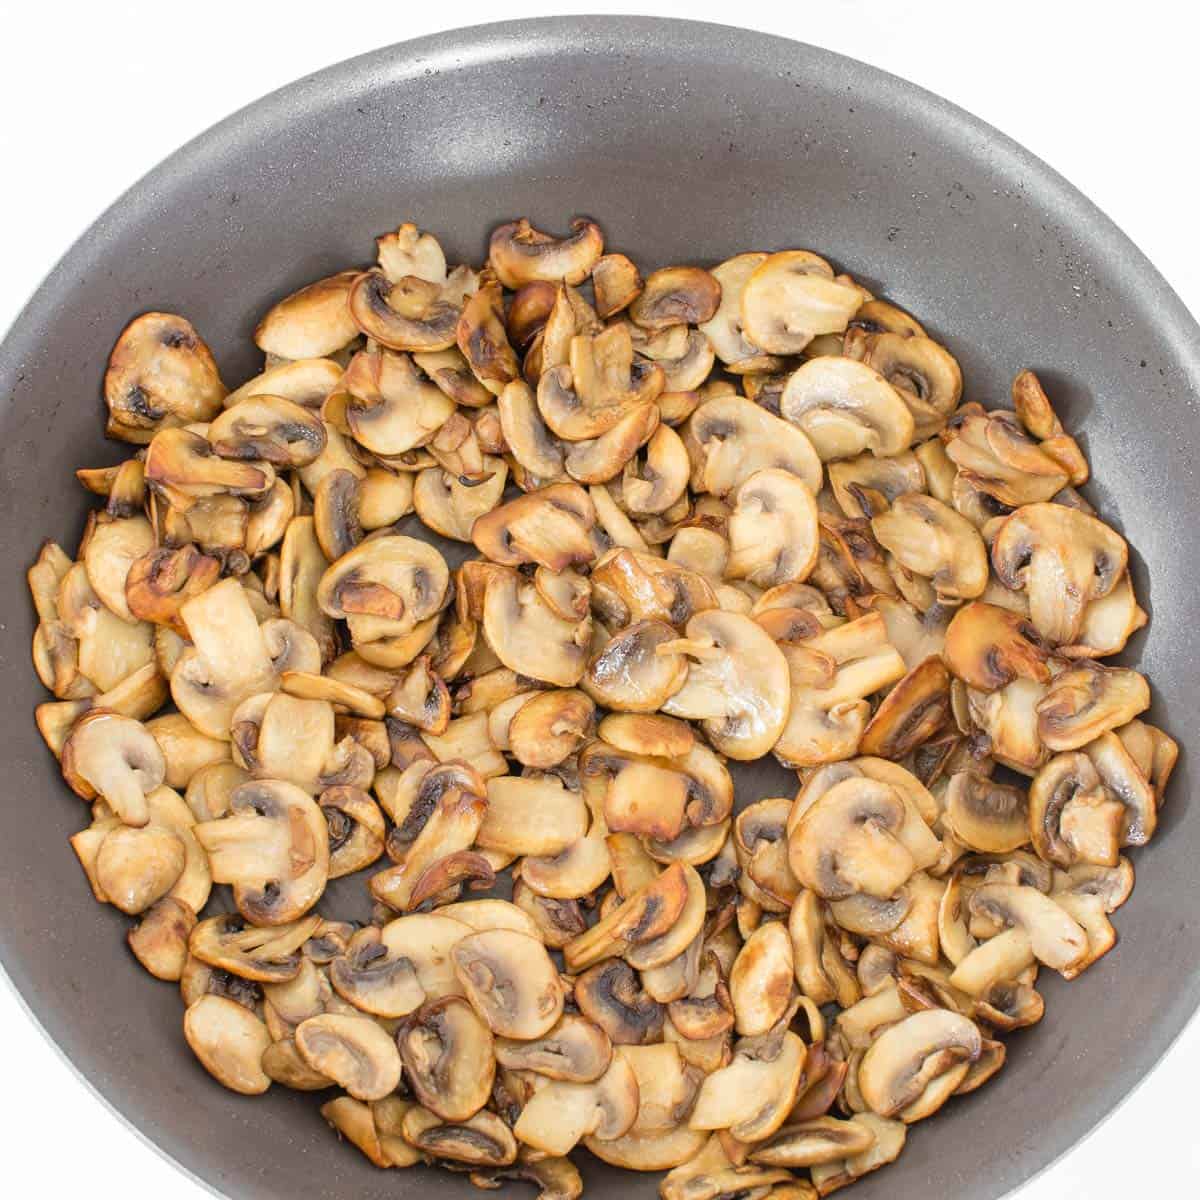 sauteed mushrooms in a pan.